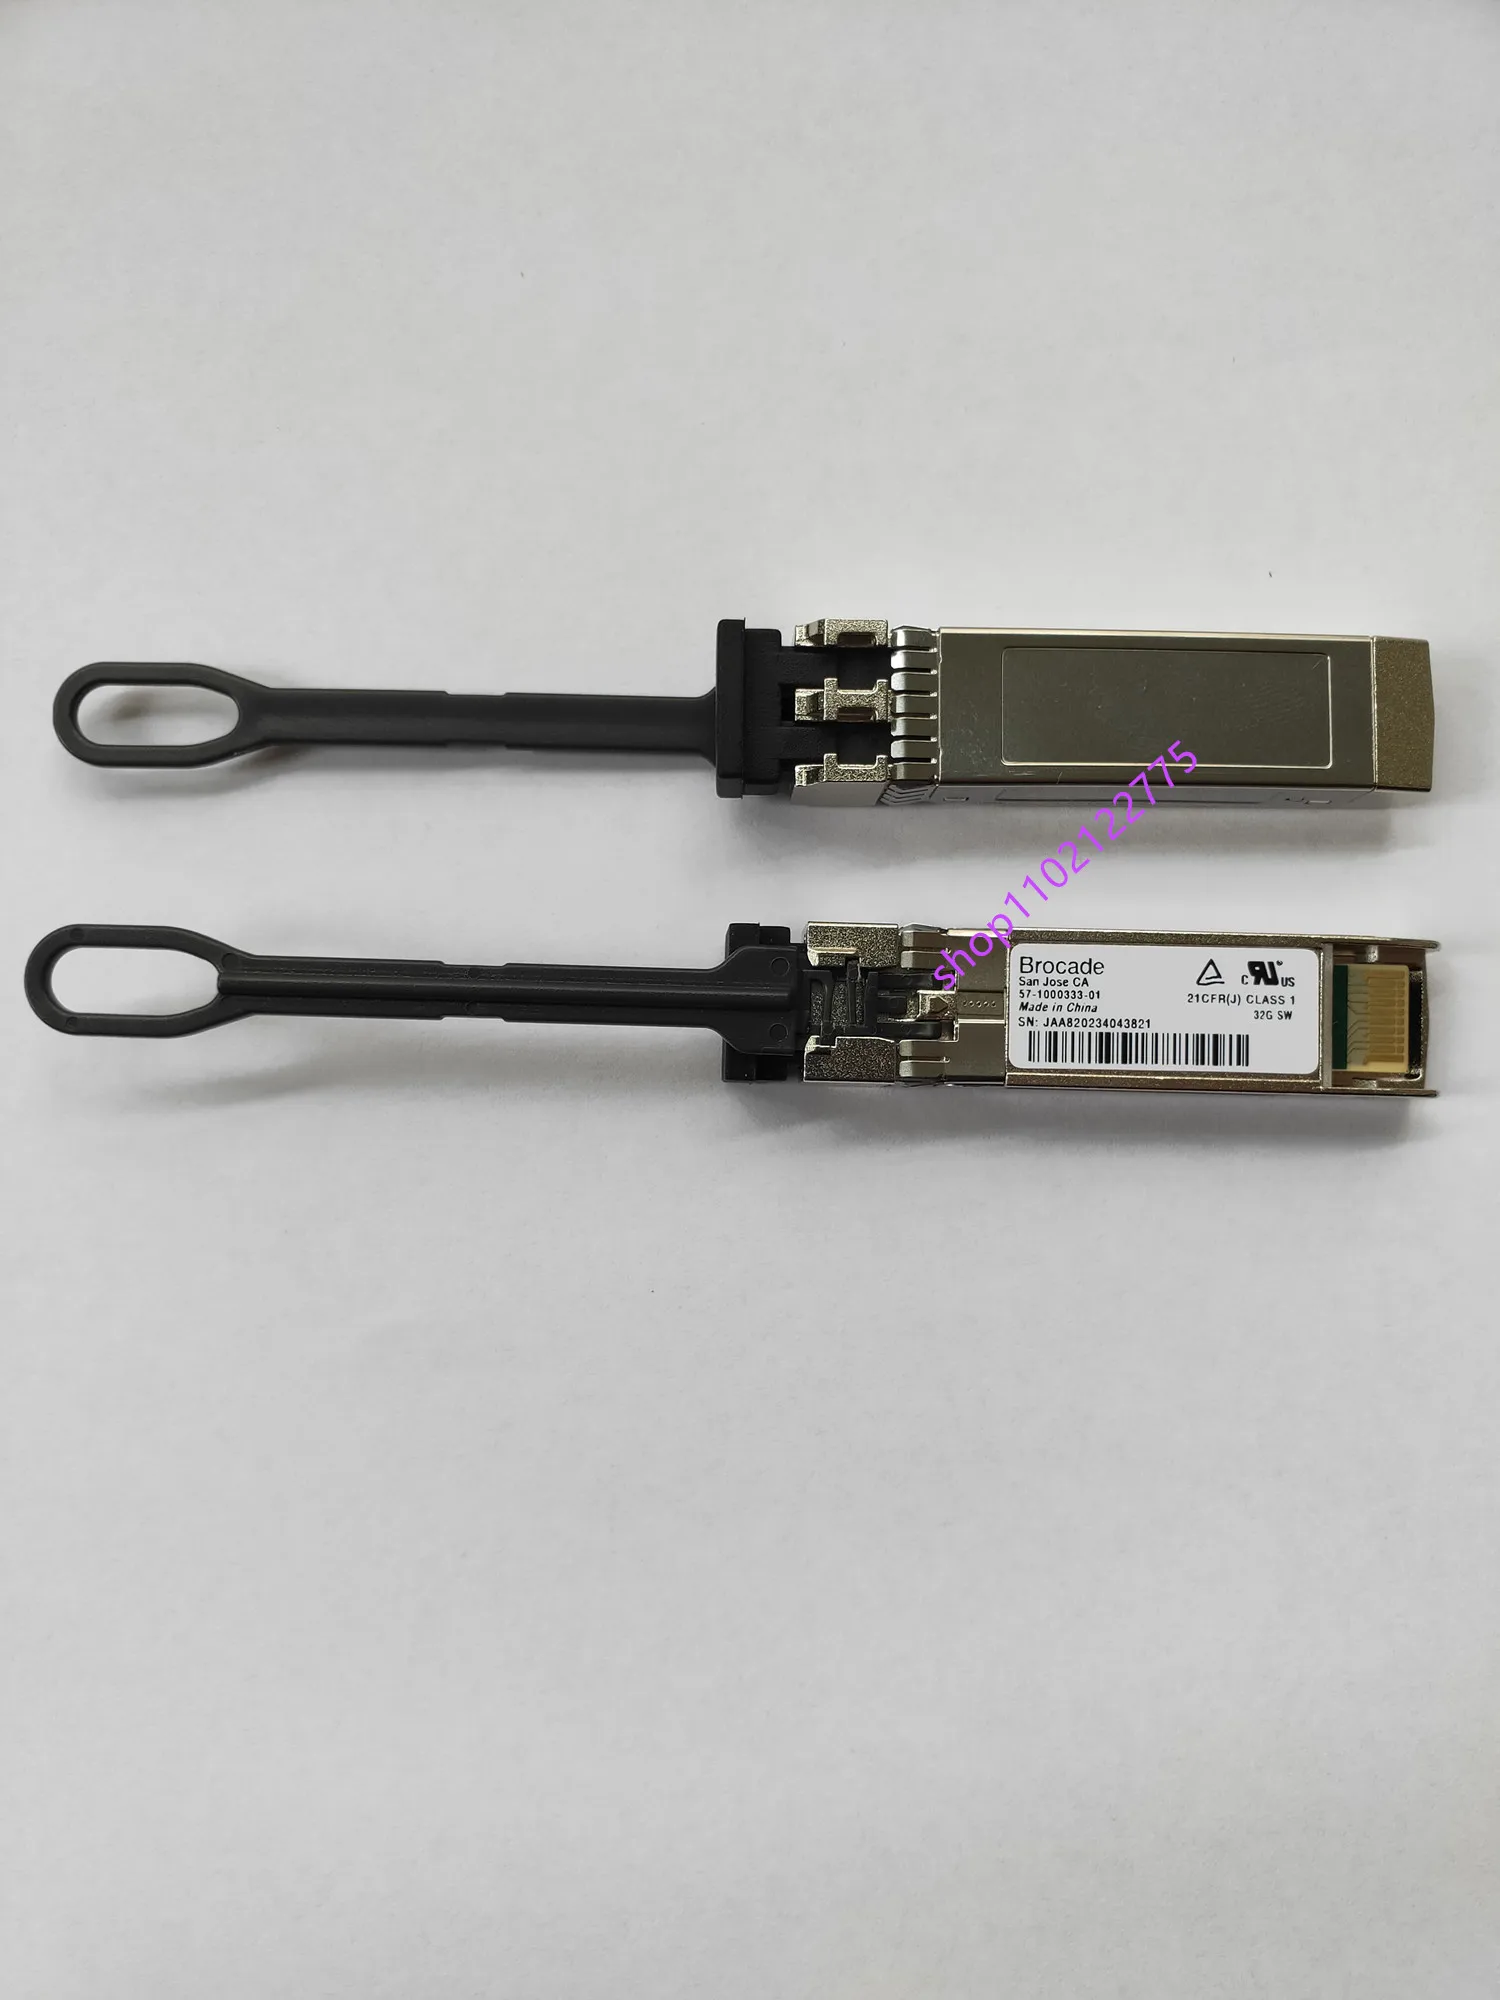 sfp 32g 57-1000333-01 brocade 32GB SW 850NM SFP+ Used in FC32-64/ G630 FC32-64/ G630 /G620 Switches Network Optical Transceiver